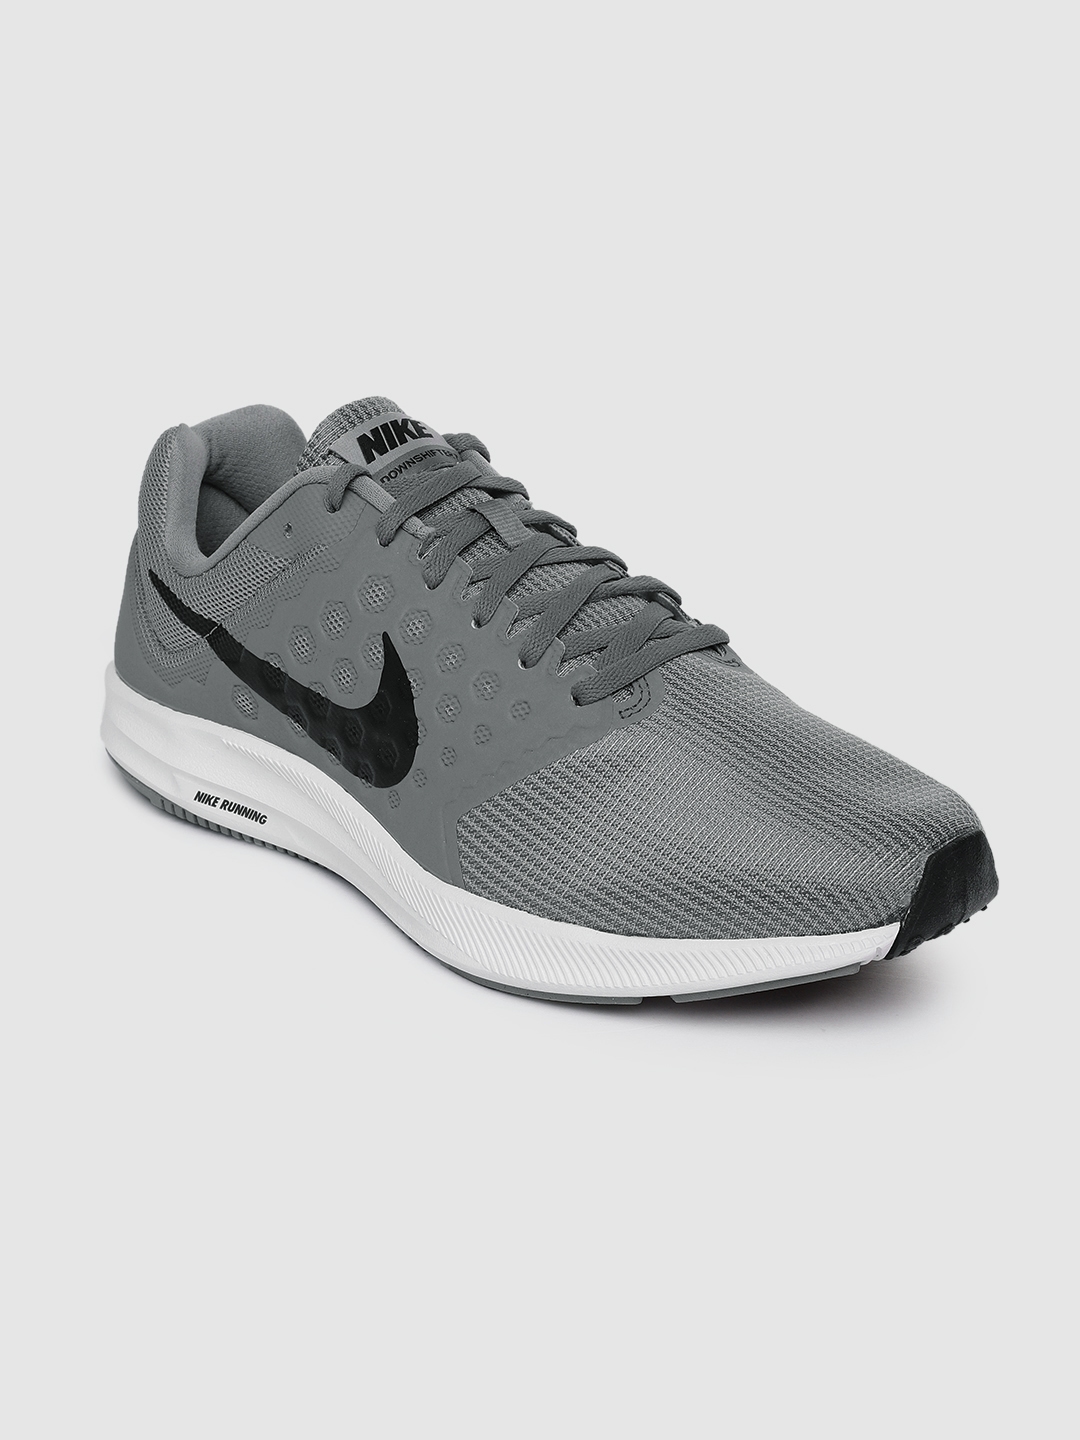 grey nike running shoes mens